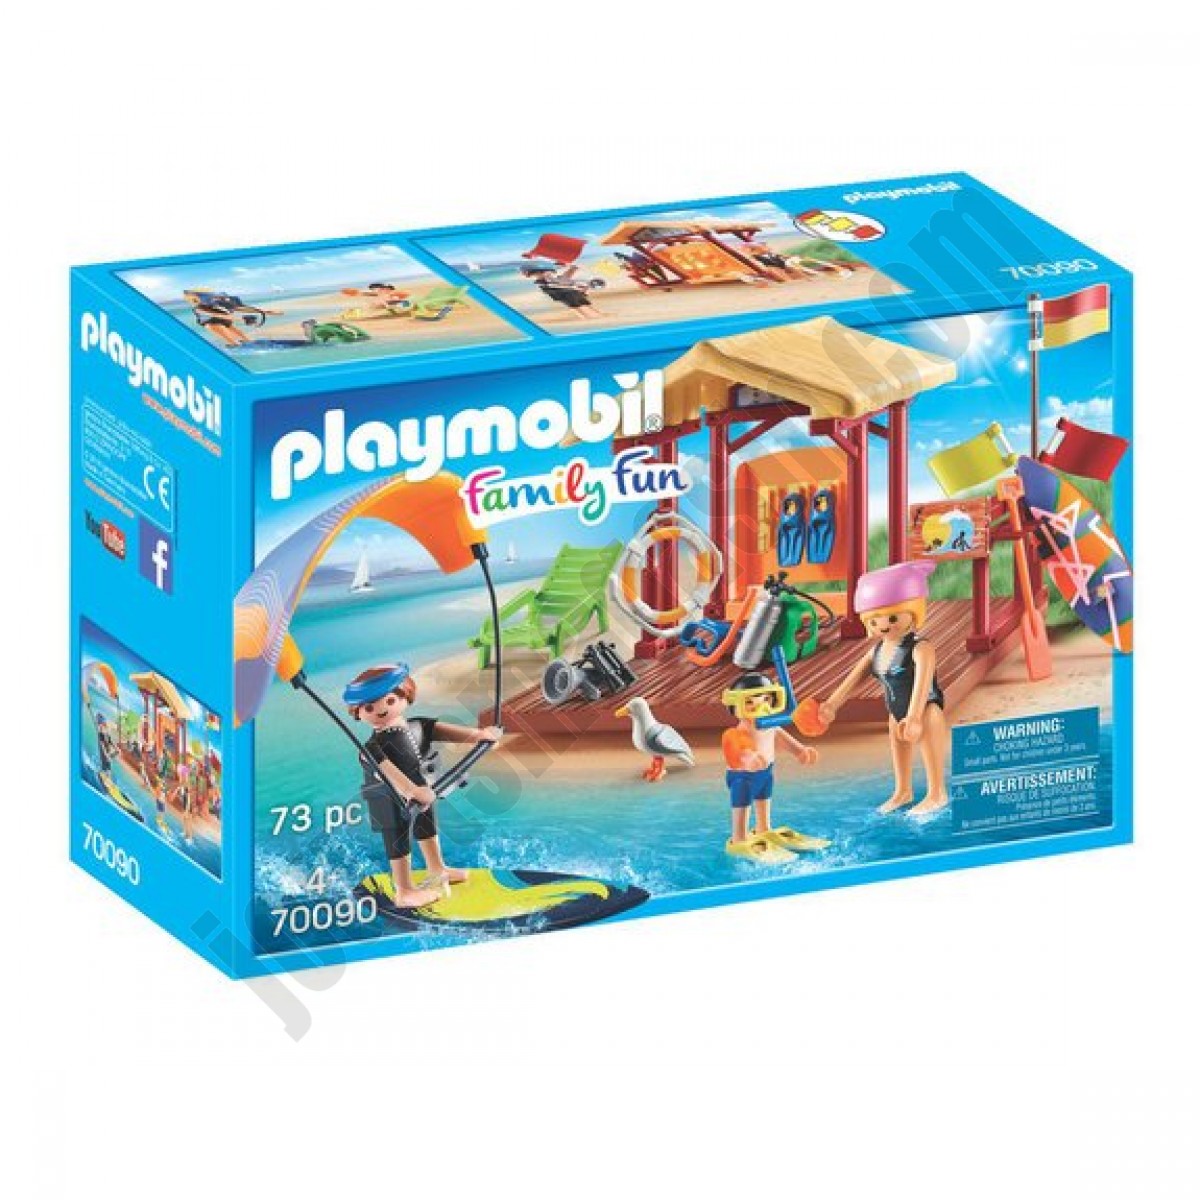 Espace de sports nautiques Playmobil Family Fun 70090 - déstockage - Espace de sports nautiques Playmobil Family Fun 70090 - déstockage